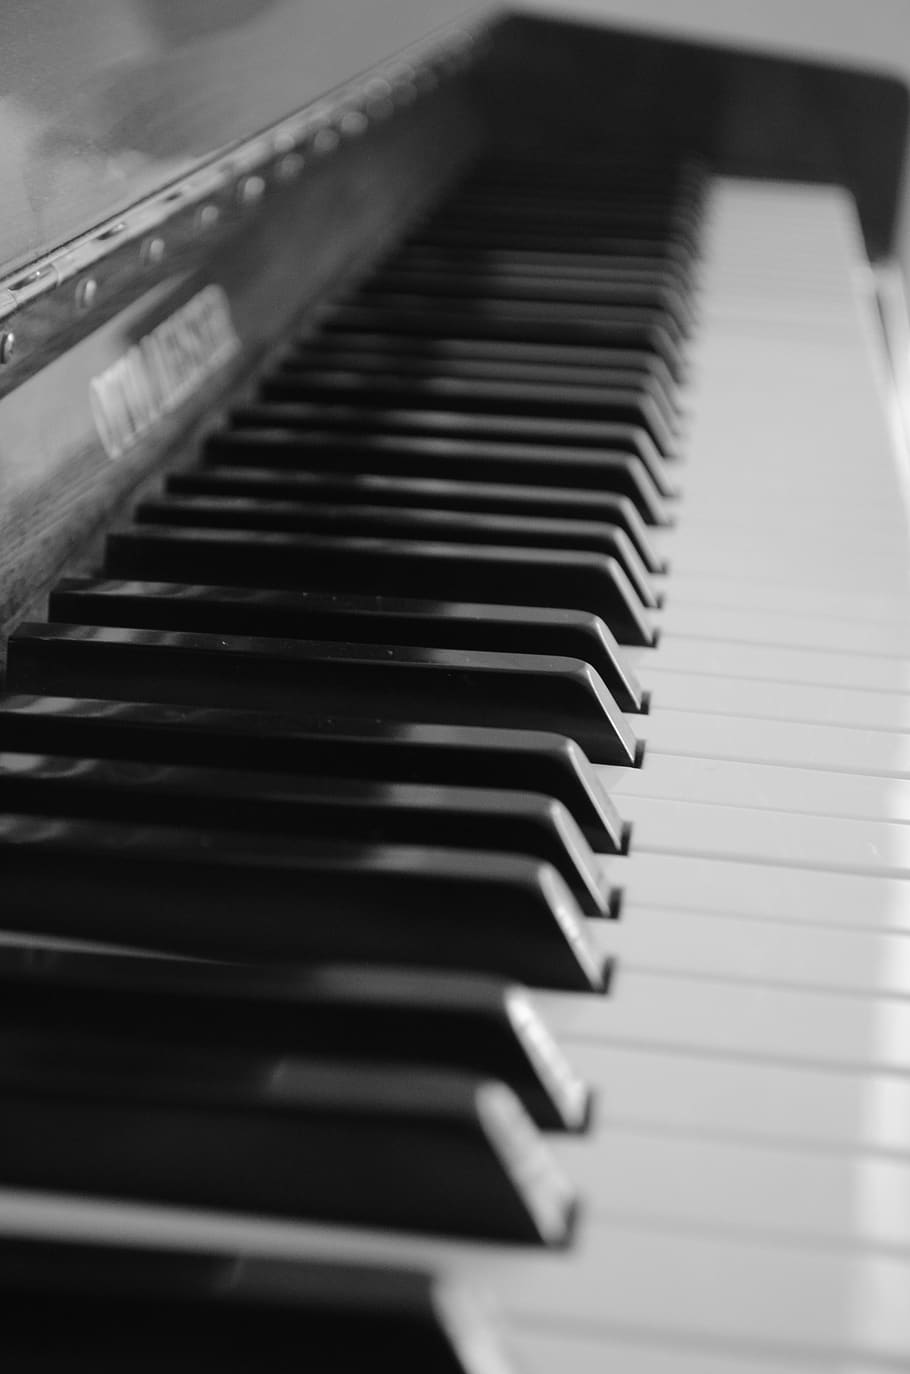 piano, piano keyboard, sheet music, keyboard instrument, notenblatt, piano keys, wing, sound, concert, keys